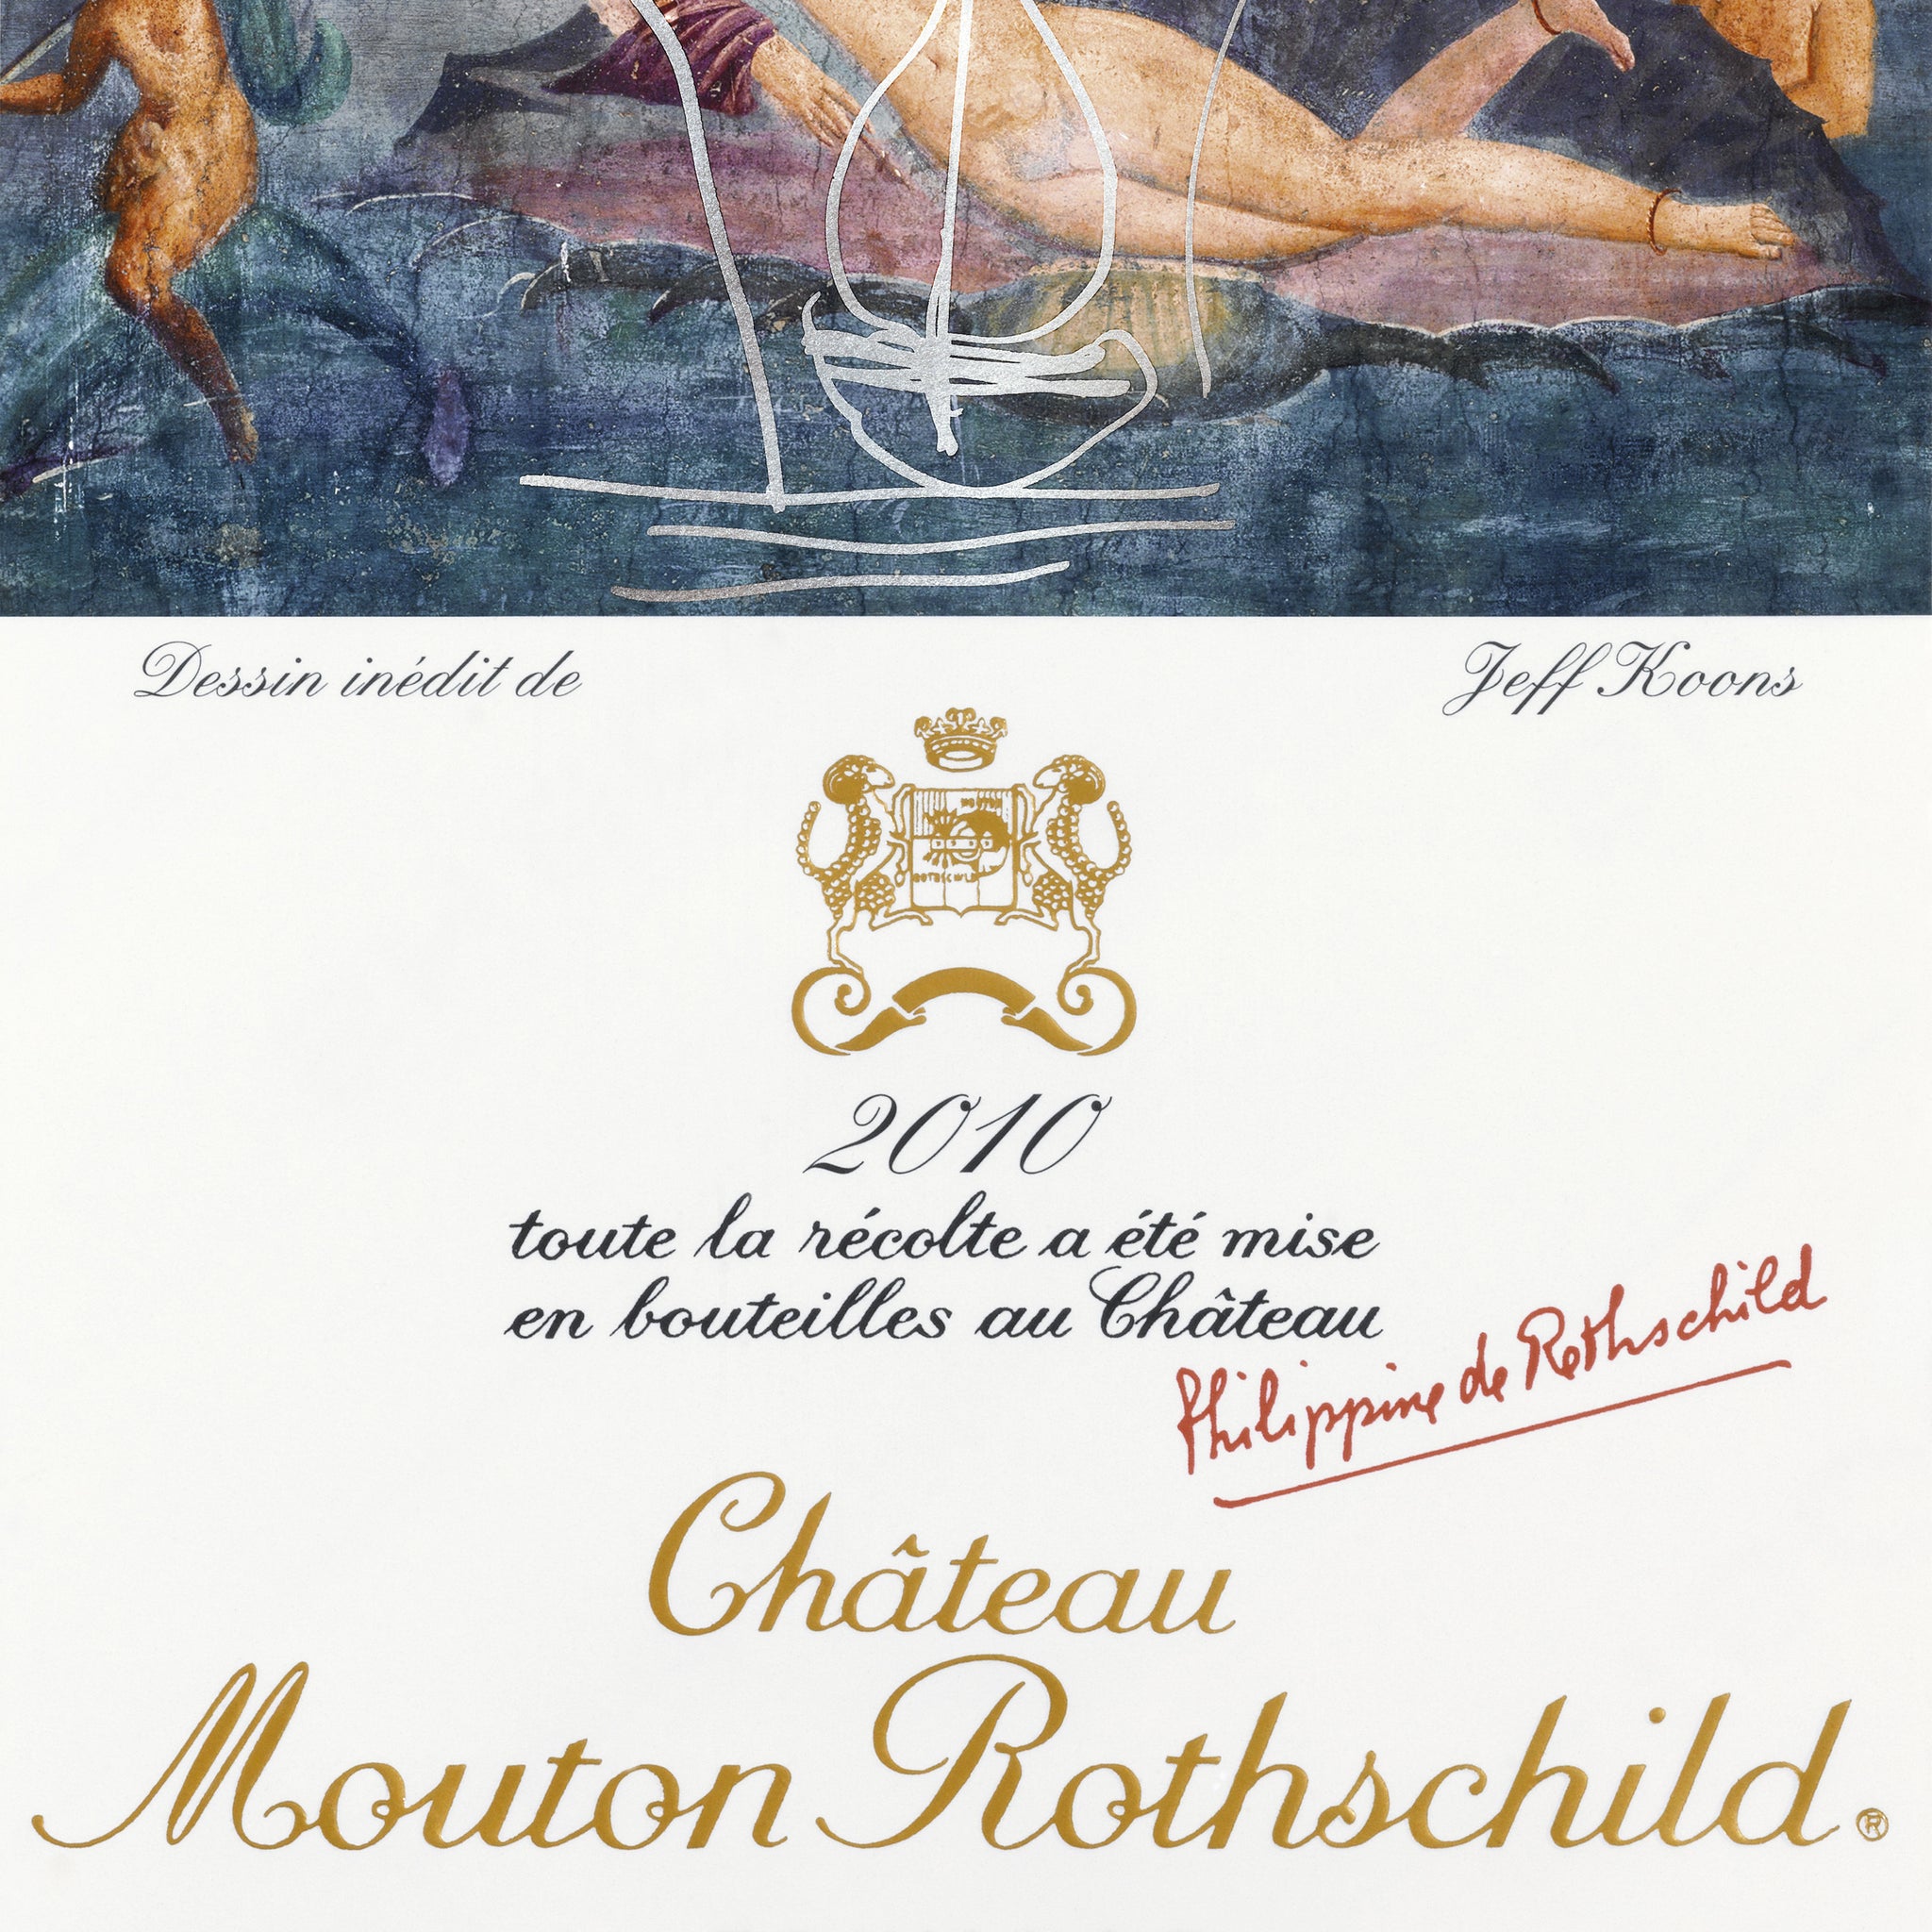 Chateau Mouton Rothschild 2010 (6x75cl)